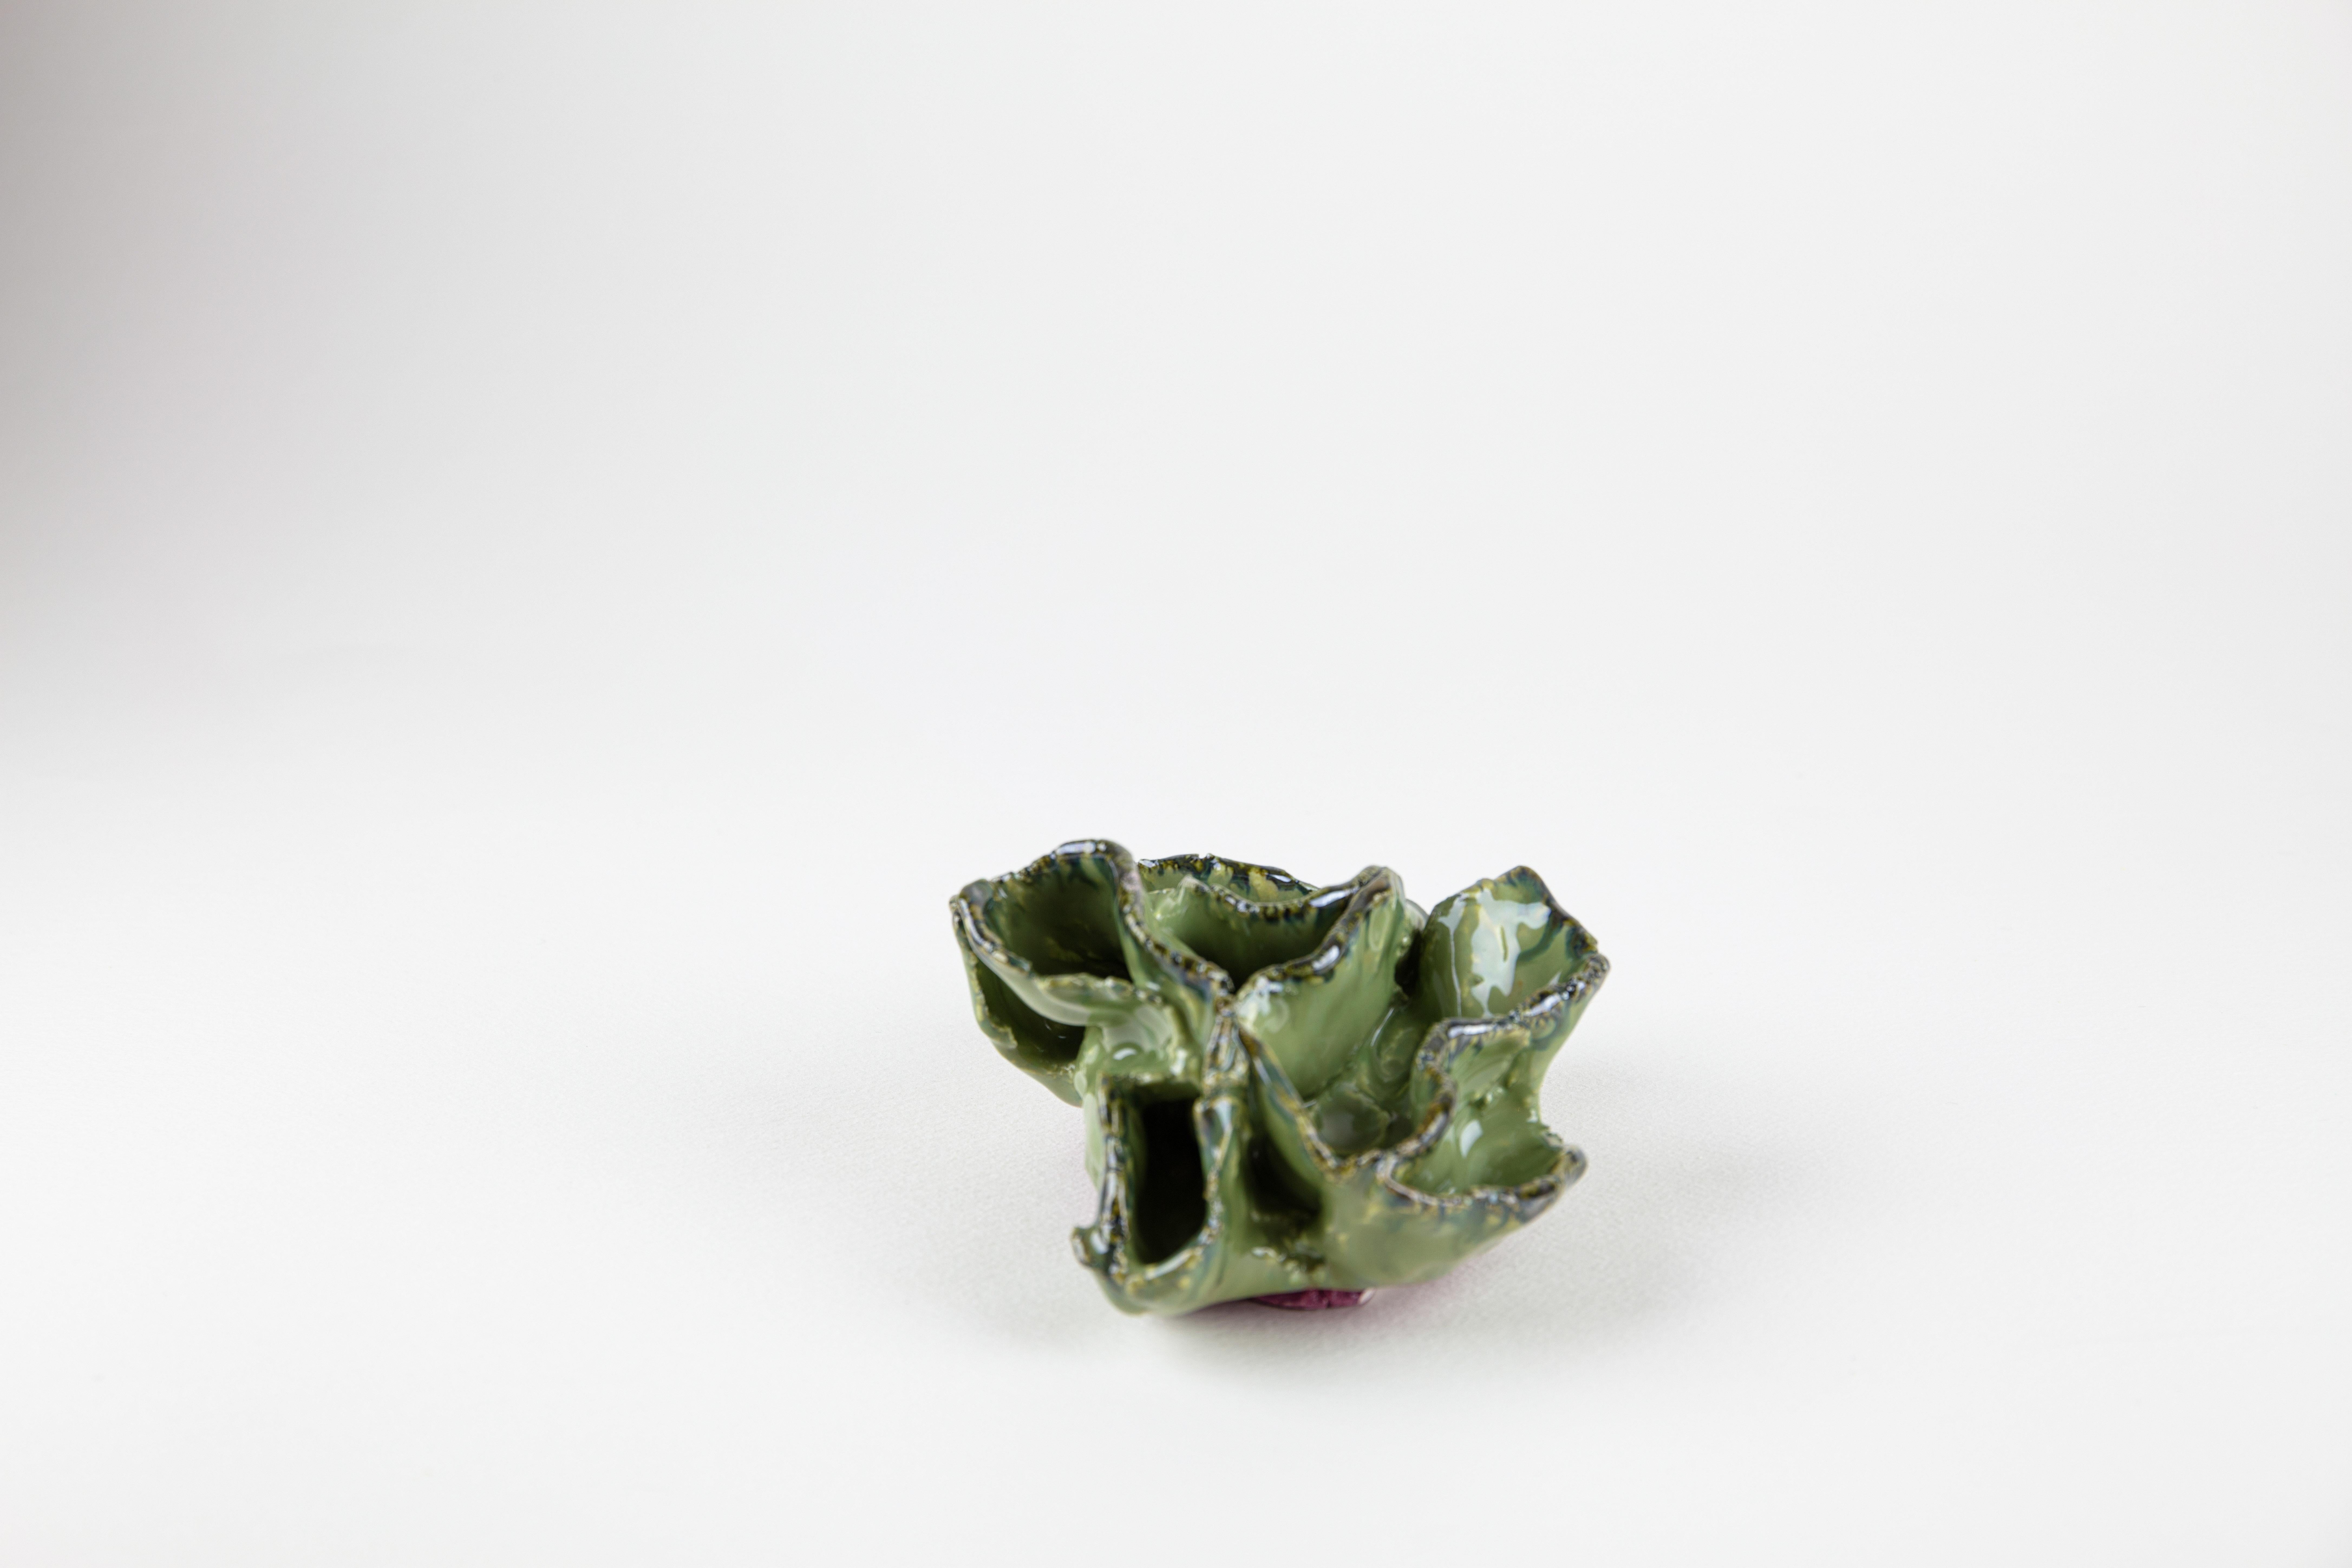 Lichen 3, Abstract ceramic sculpture, green flower - Sculpture by Rachelle Krieger